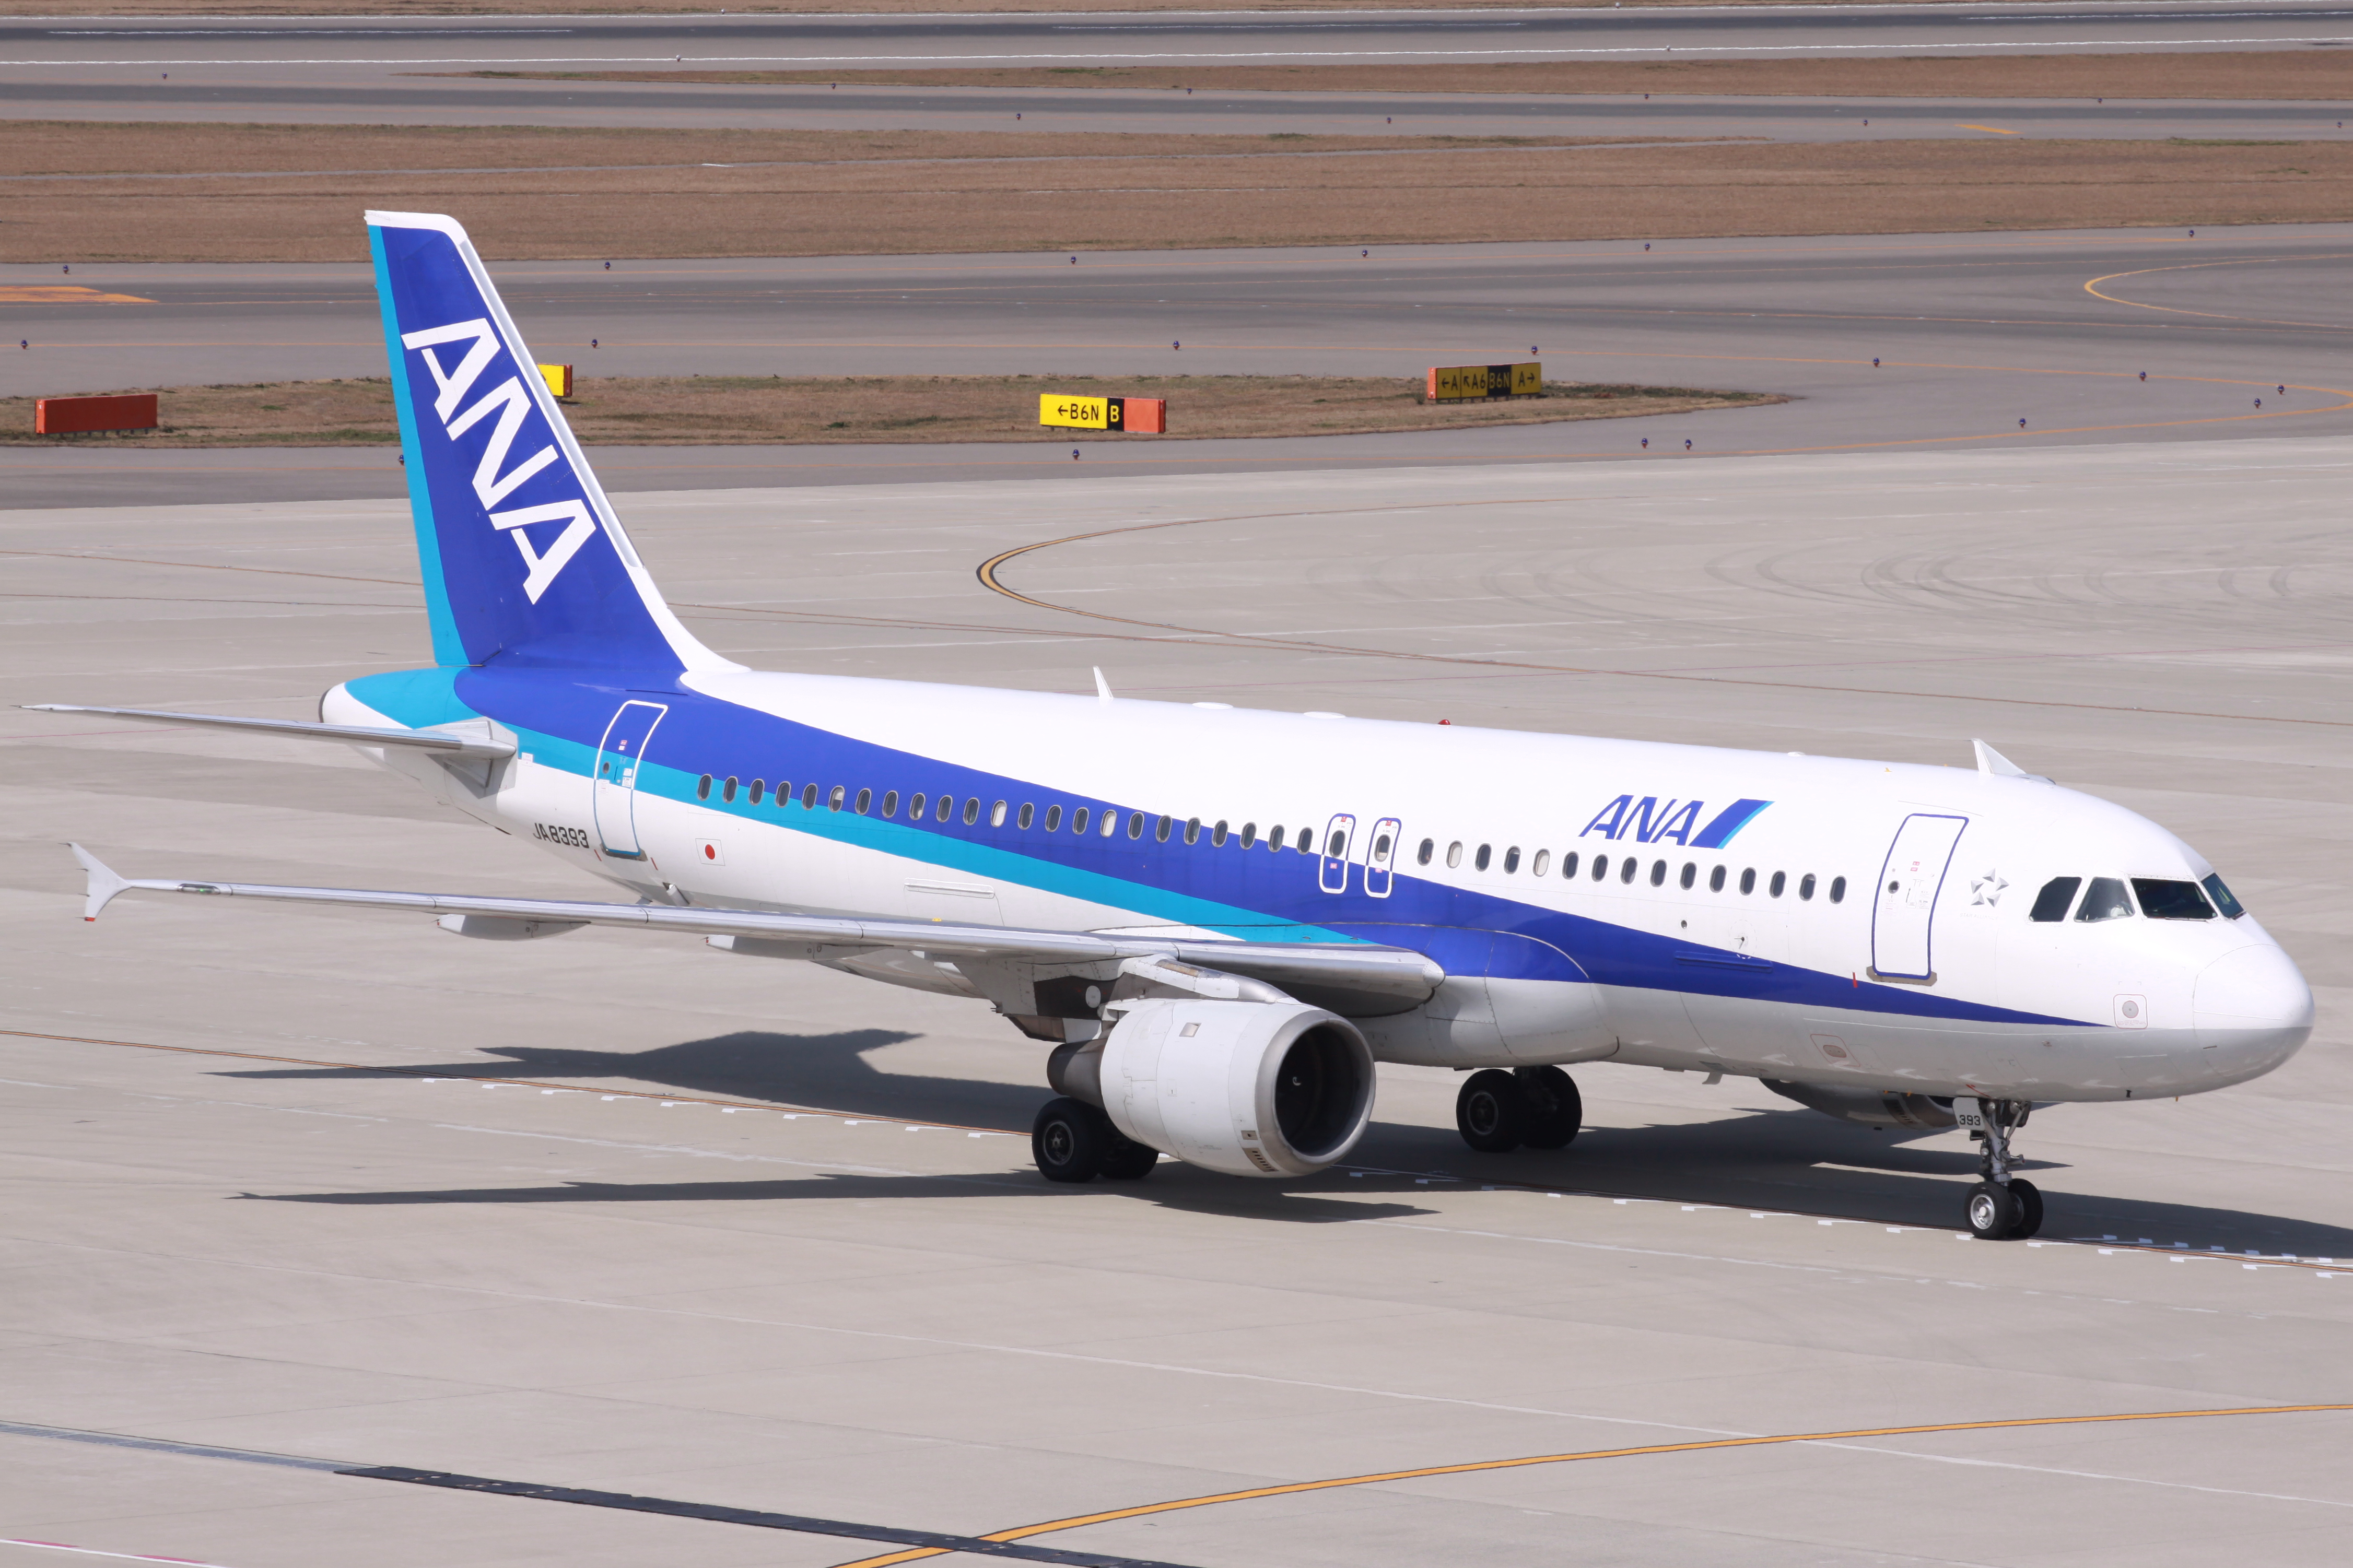 File:ANA A320-200(JA8393) (4563647420).jpg - Wikimedia Commons